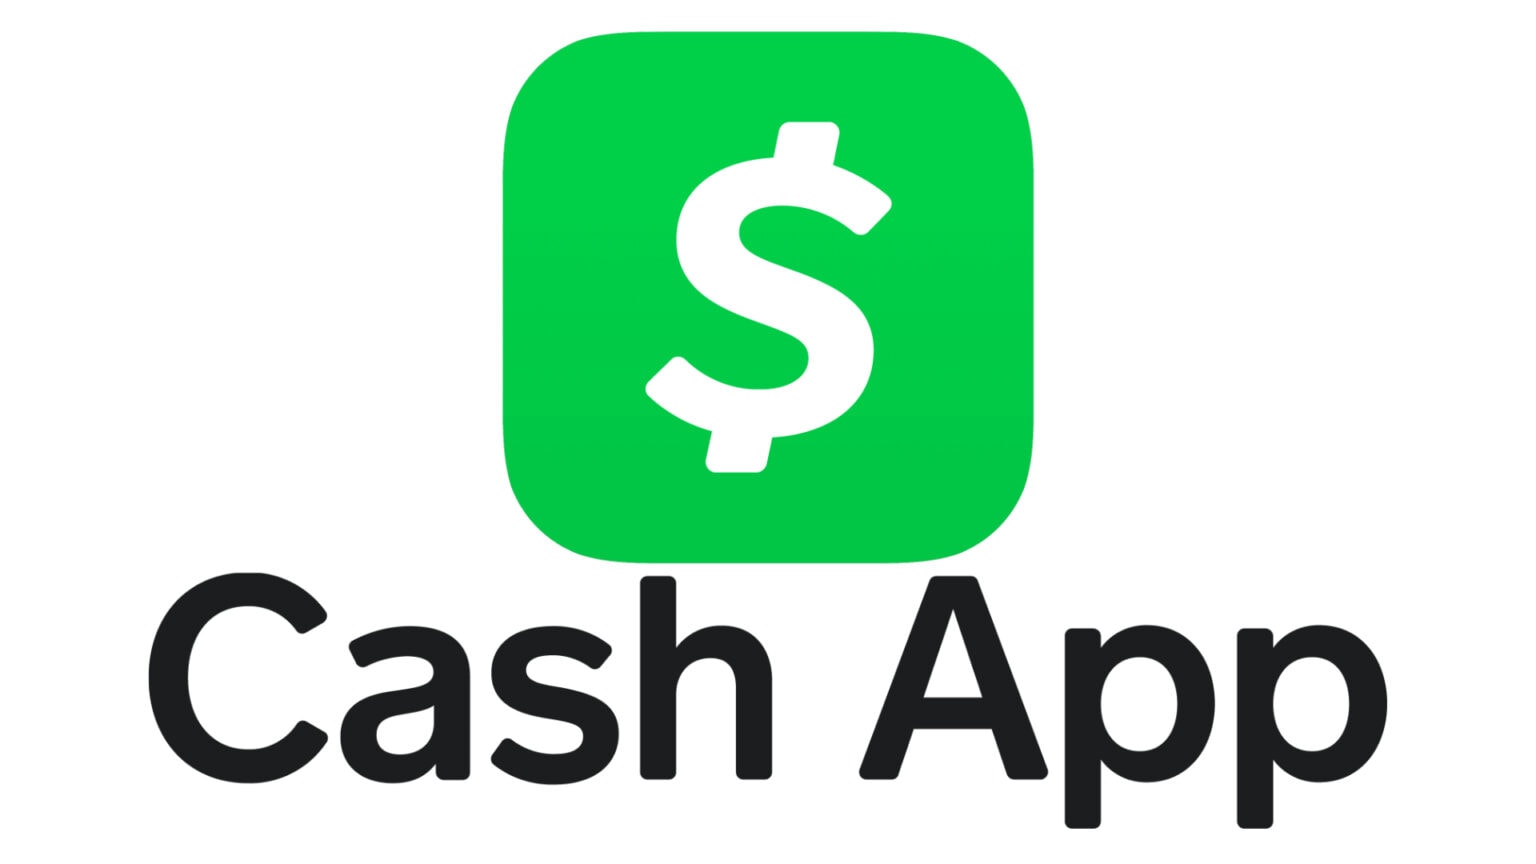 Cash App suffers data breach